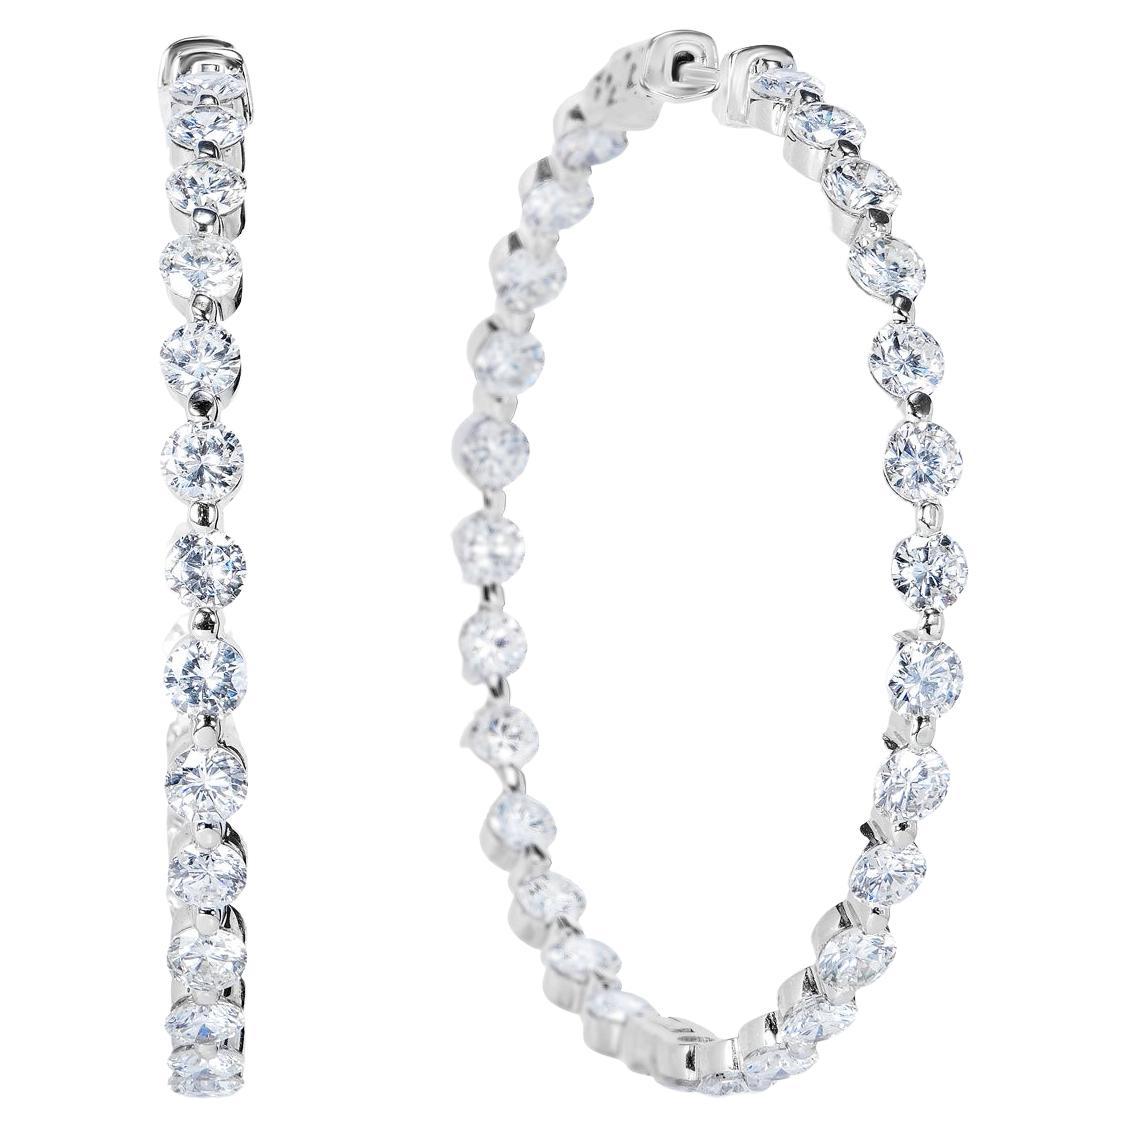 10 Carat Round Brilliant Diamond Hoop Earrings Certified For Sale